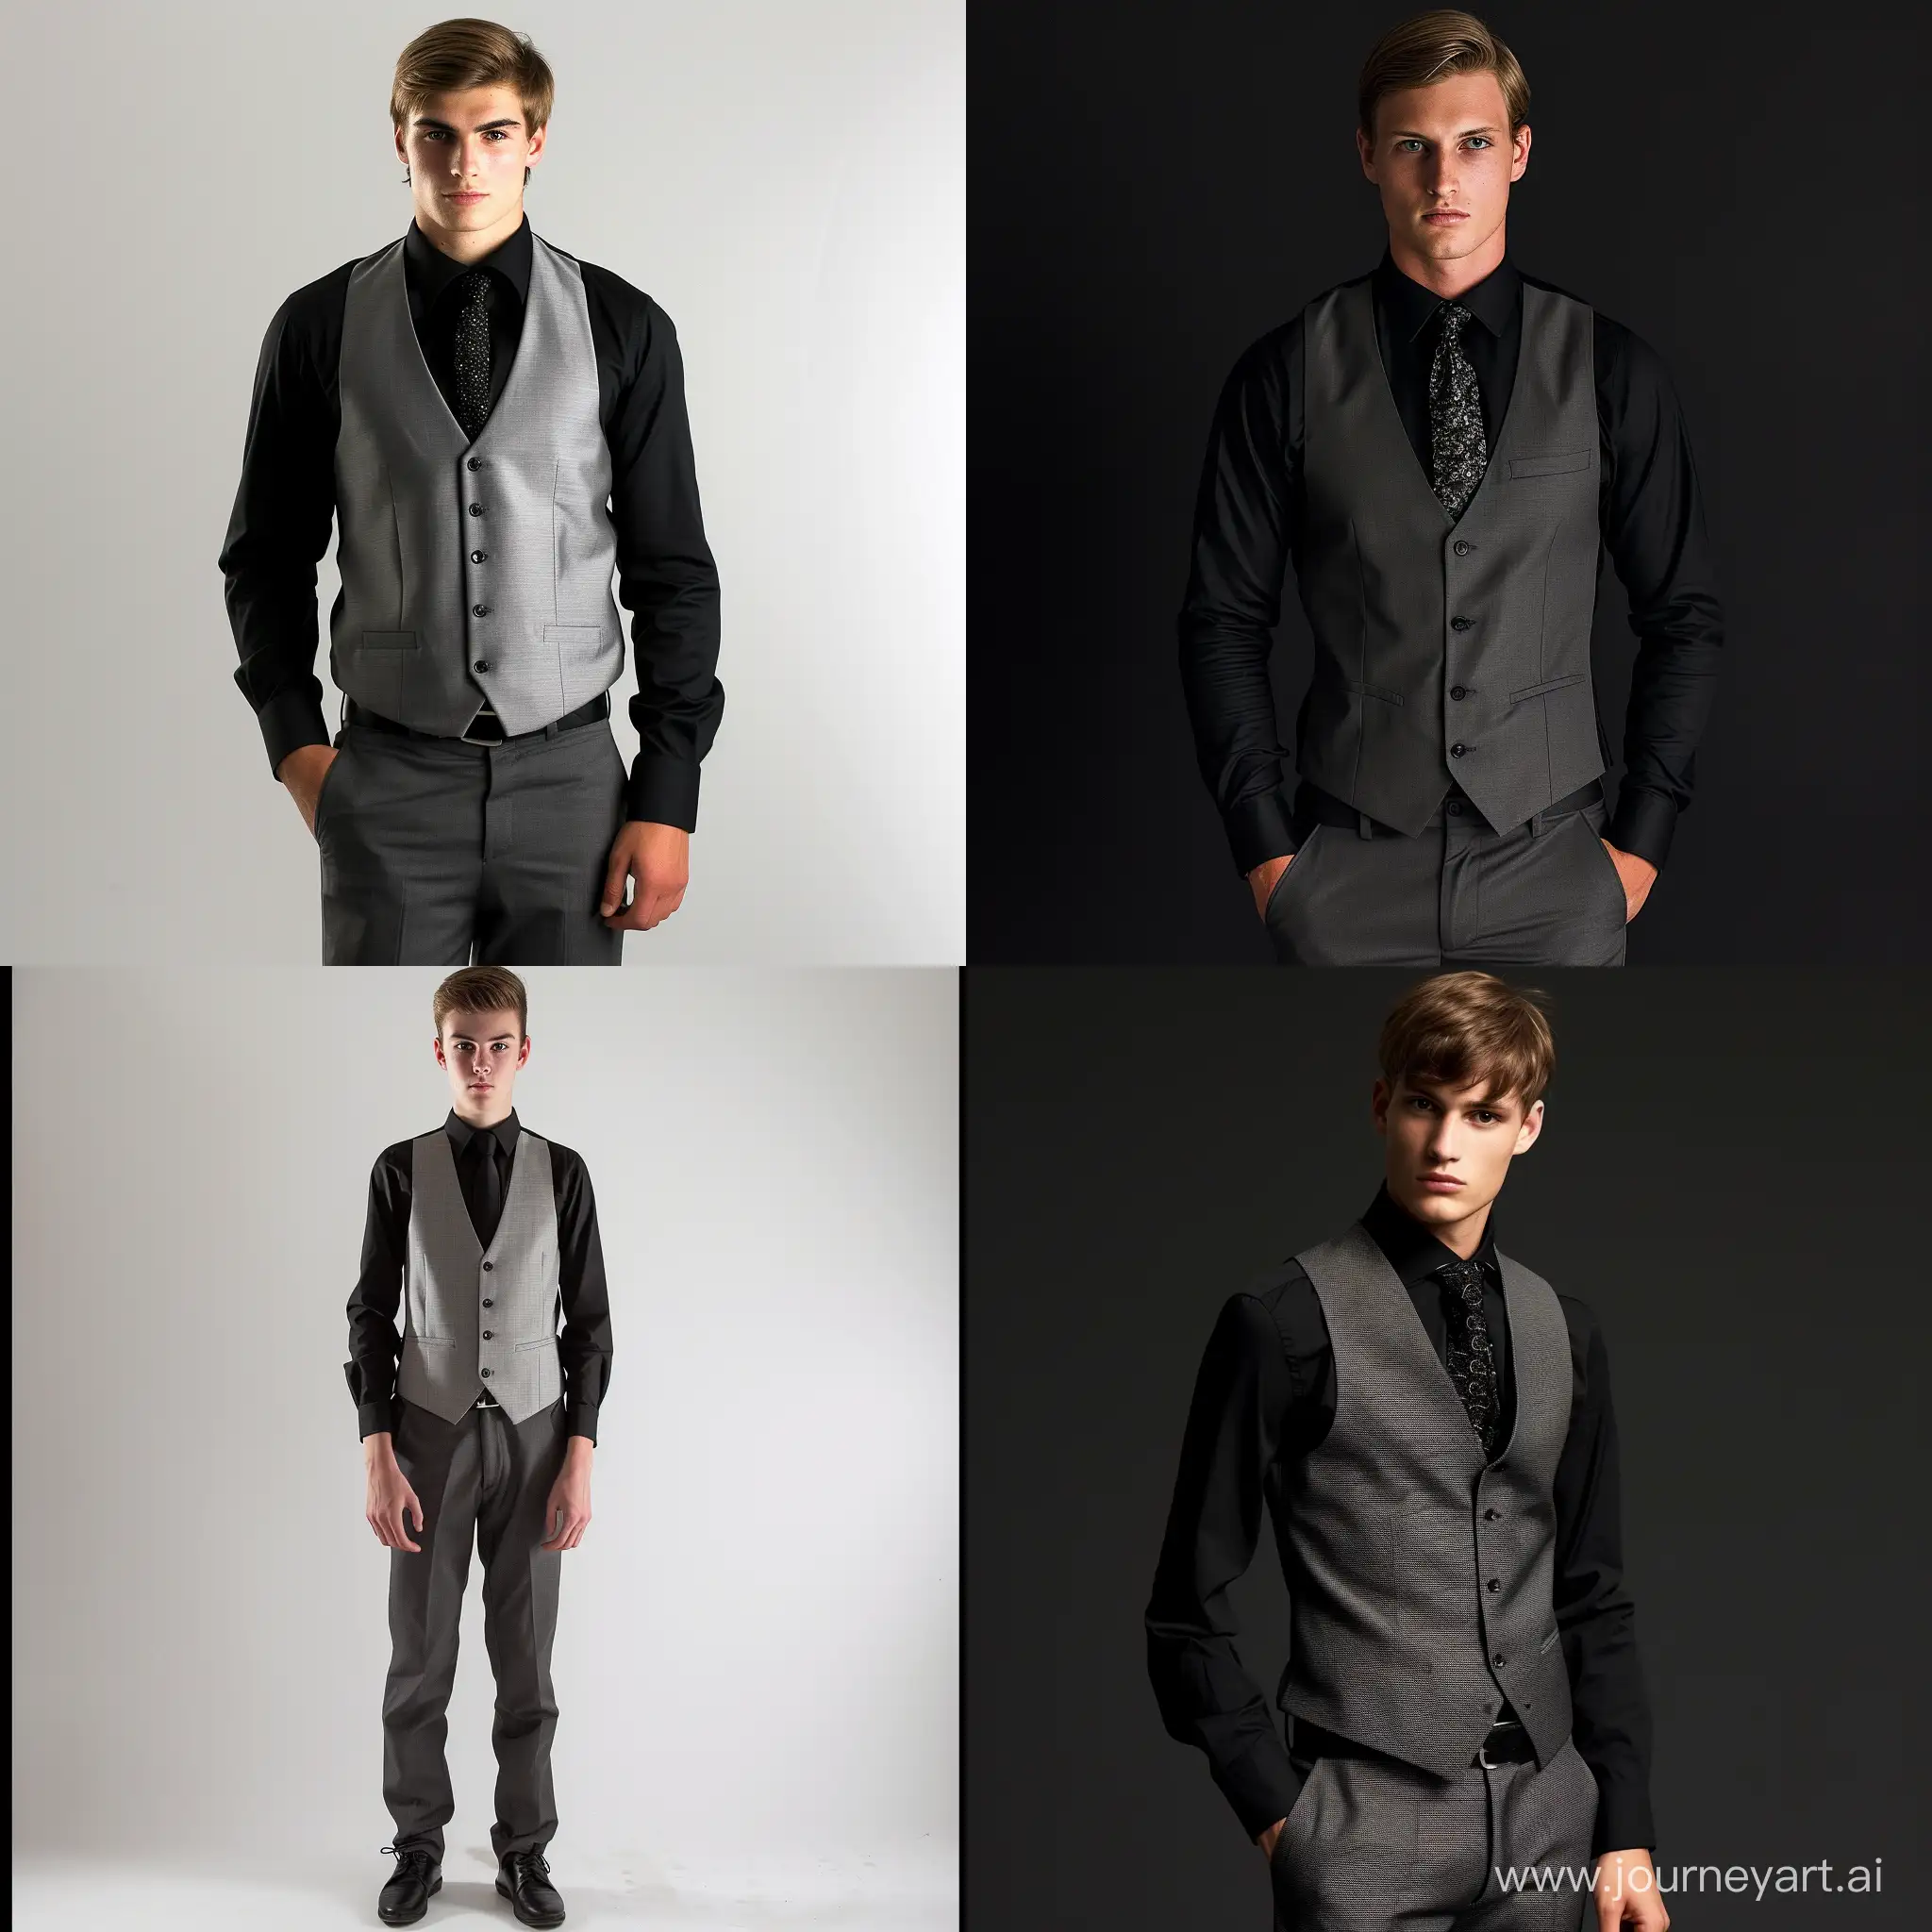 Stylish-24YearOld-in-Gray-Vest-and-Black-Attire-Urban-Elegance